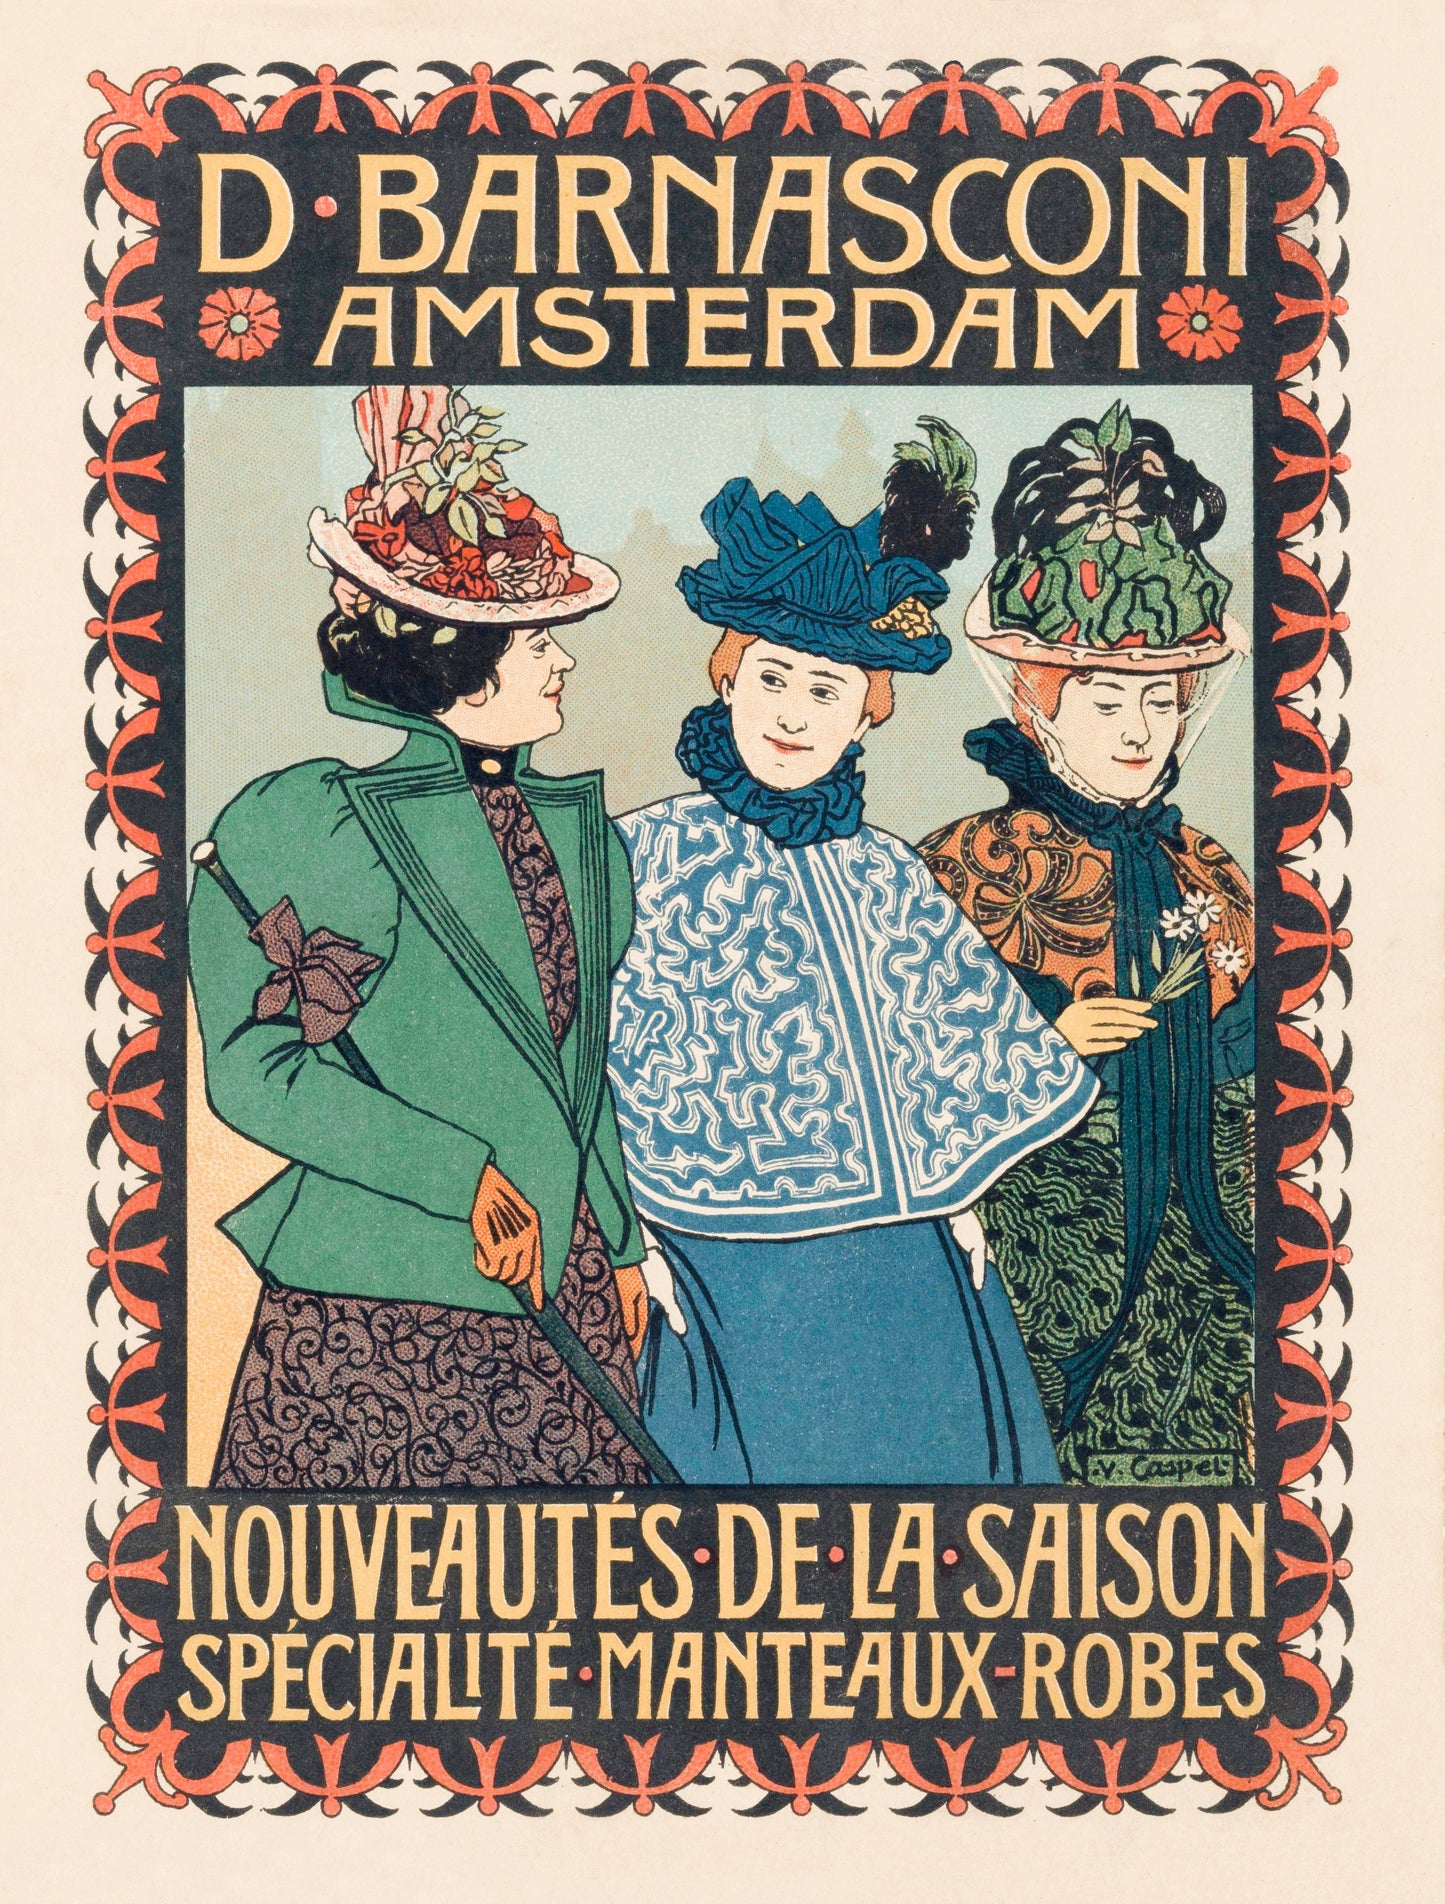 Johann George Van Caspel Poster Advertisements [11 Images]